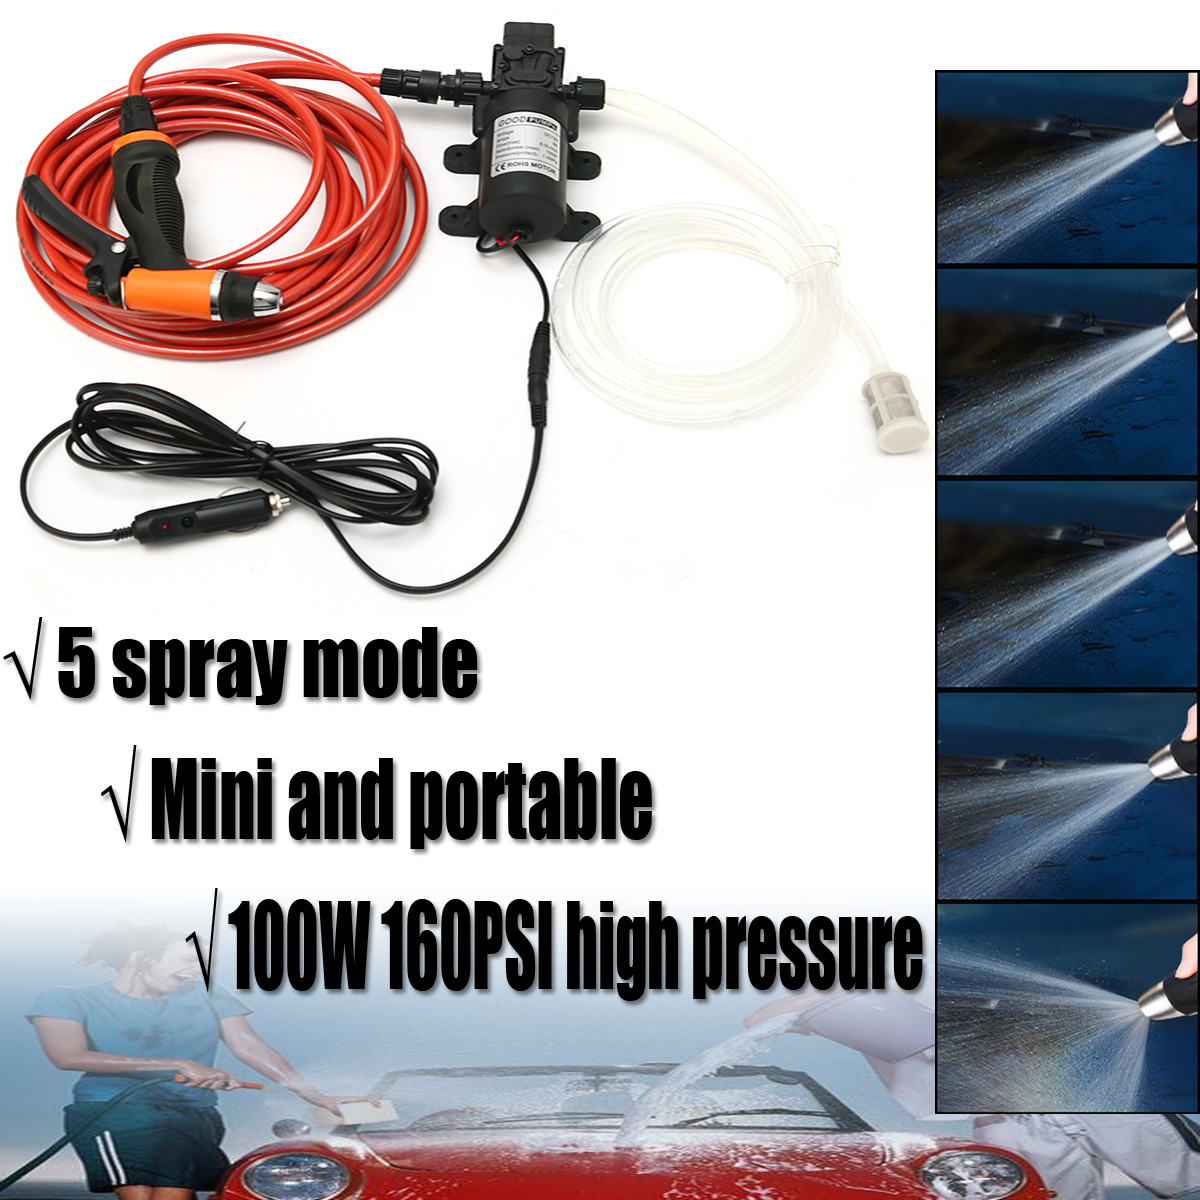 12V-Portable-100W-160PSI-High-Pressure-Car-Electric-Washer-Auto-Wash-Pump-Set-1141524